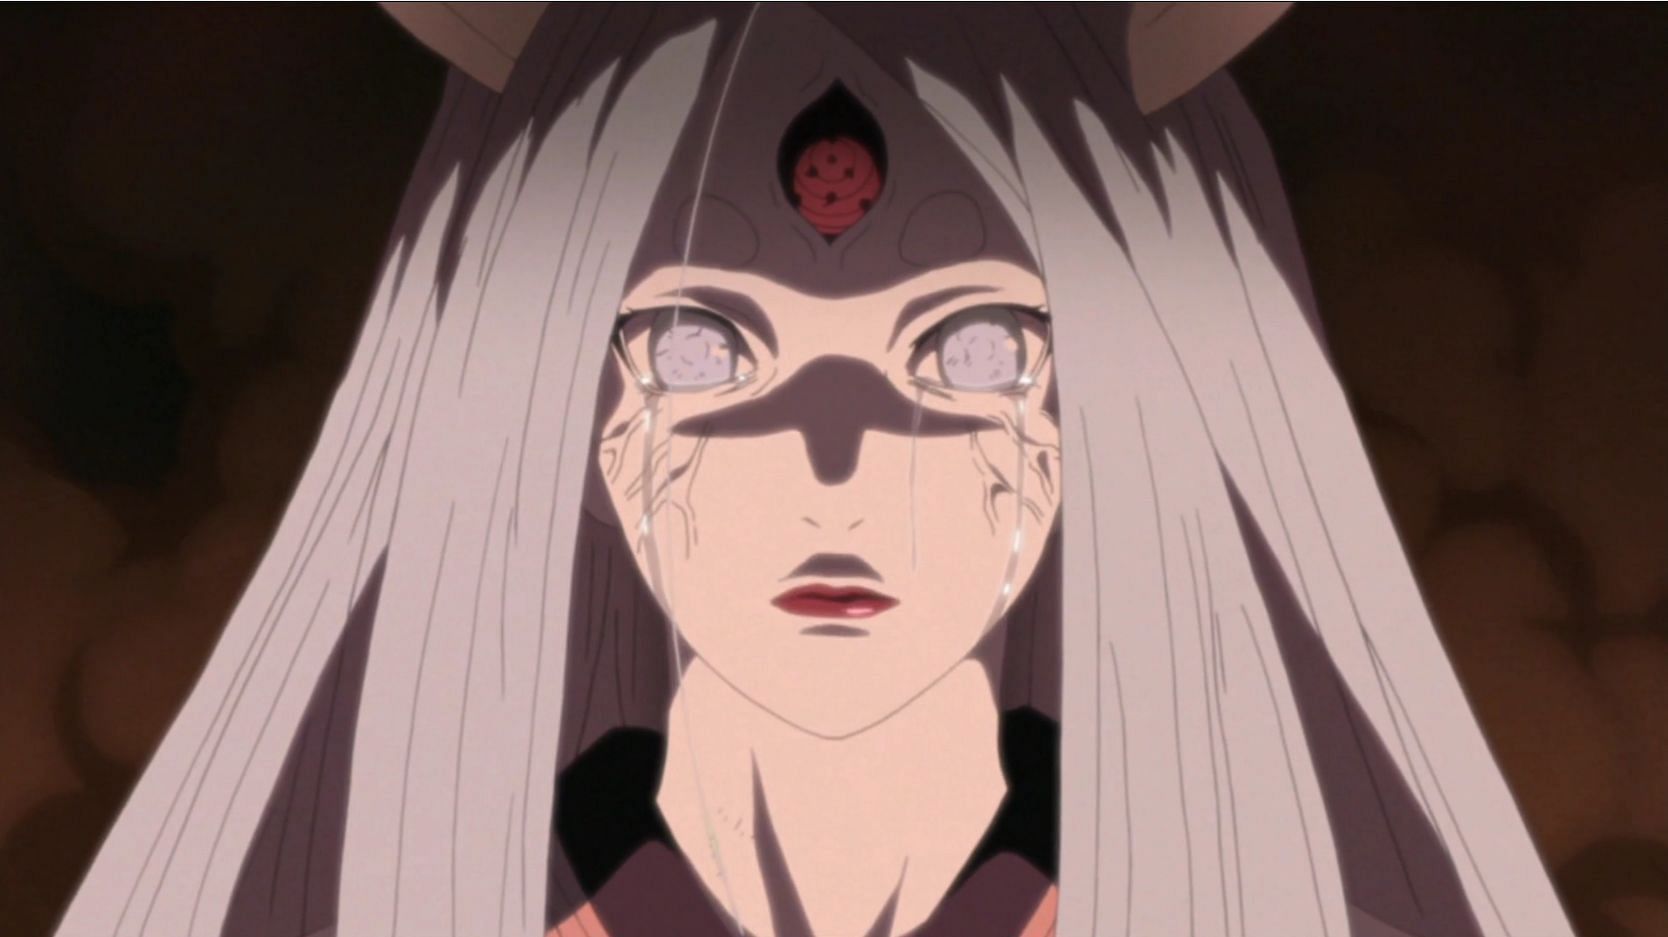 Kaguya as shown in the anime (Image via Naruto)